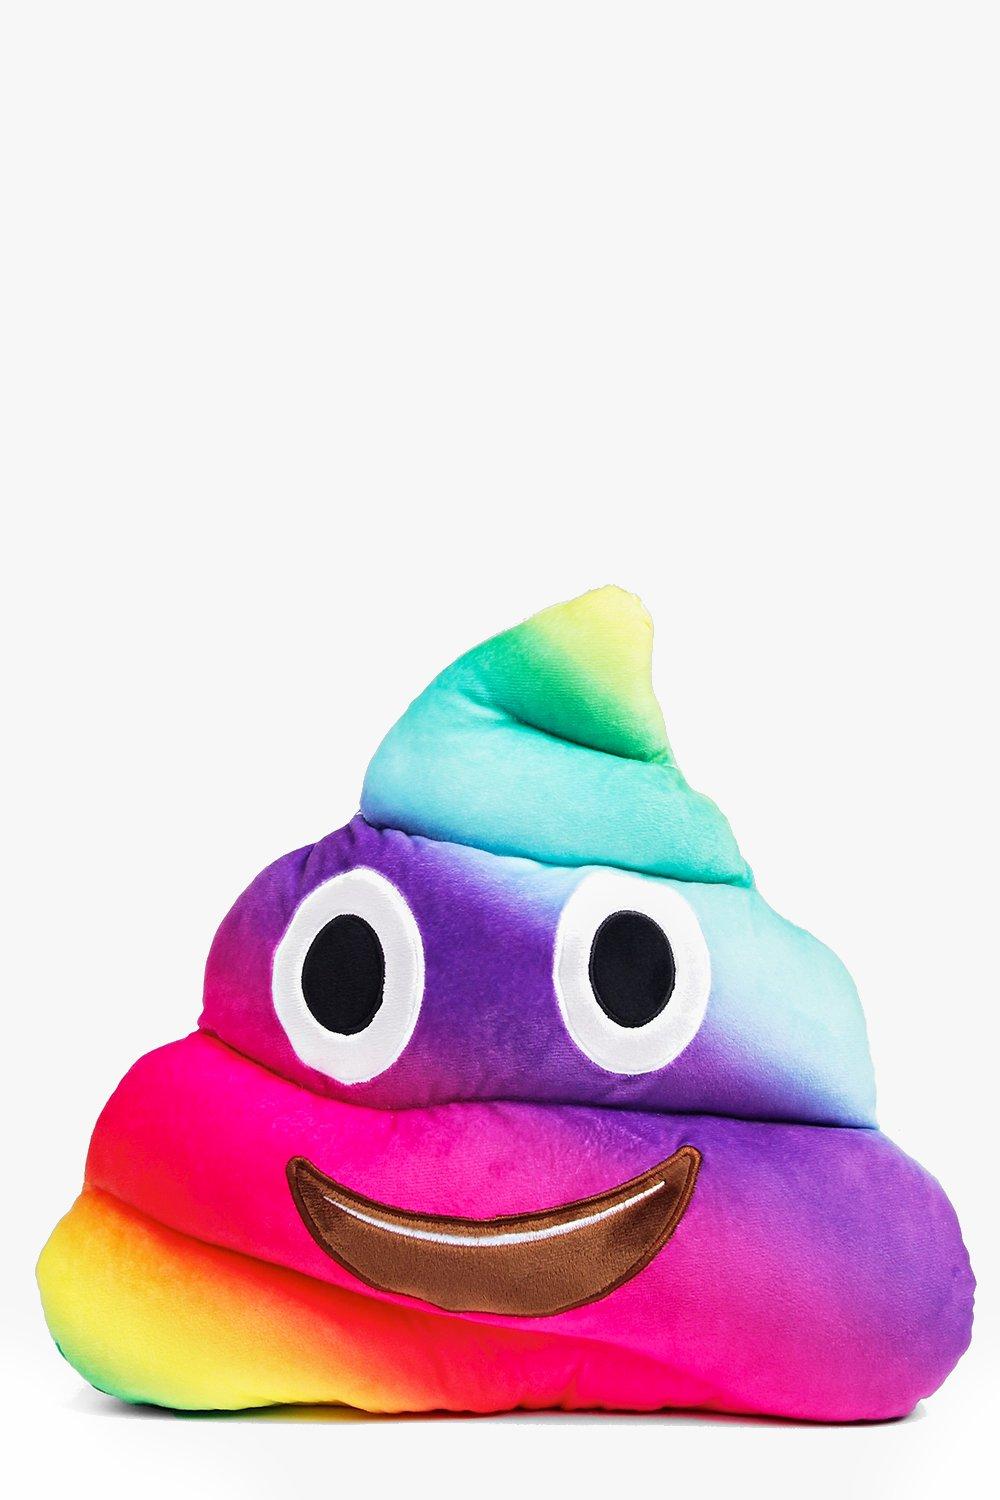 poop emoji cushion